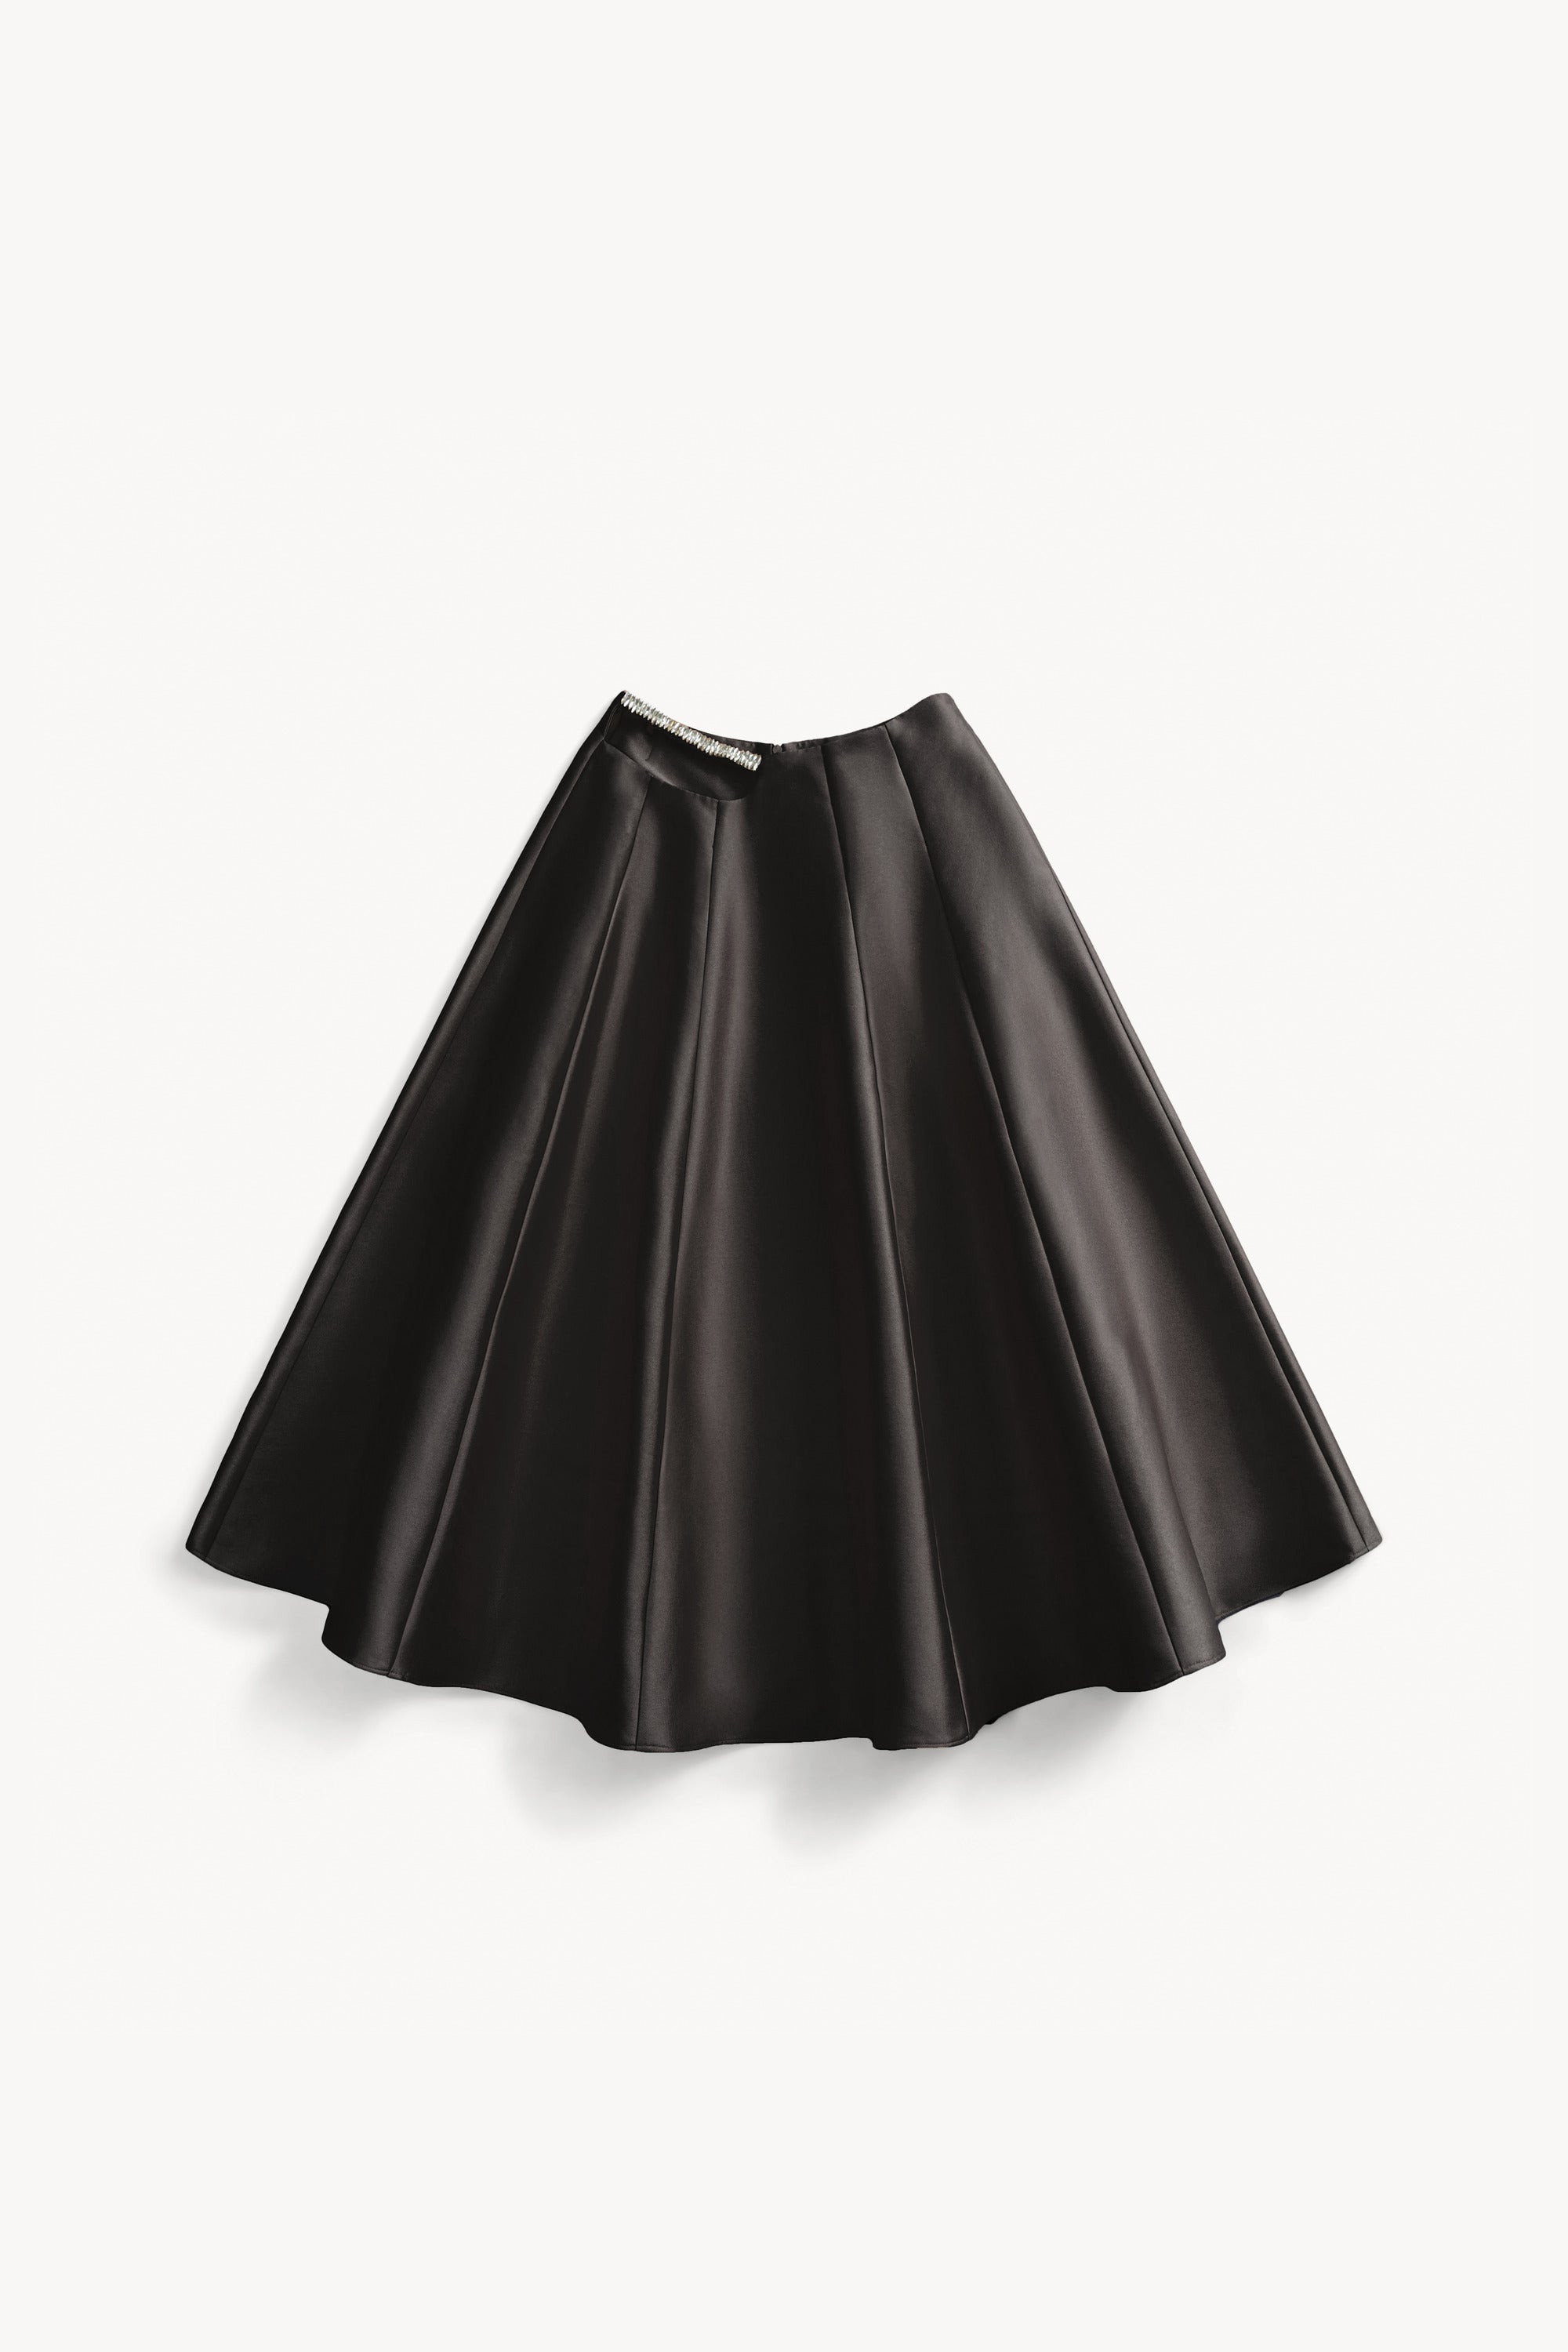 CARPENTER A-line Skirt with Cutout